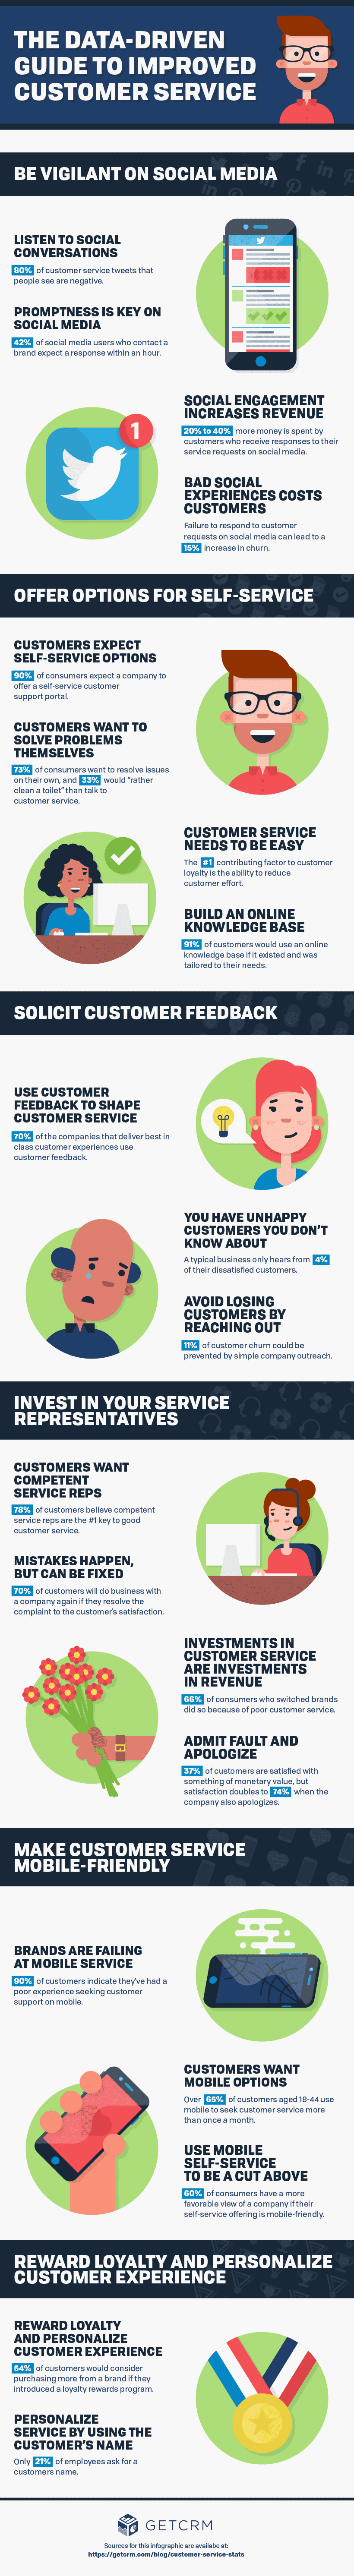 Data driven Guide to Customer Service